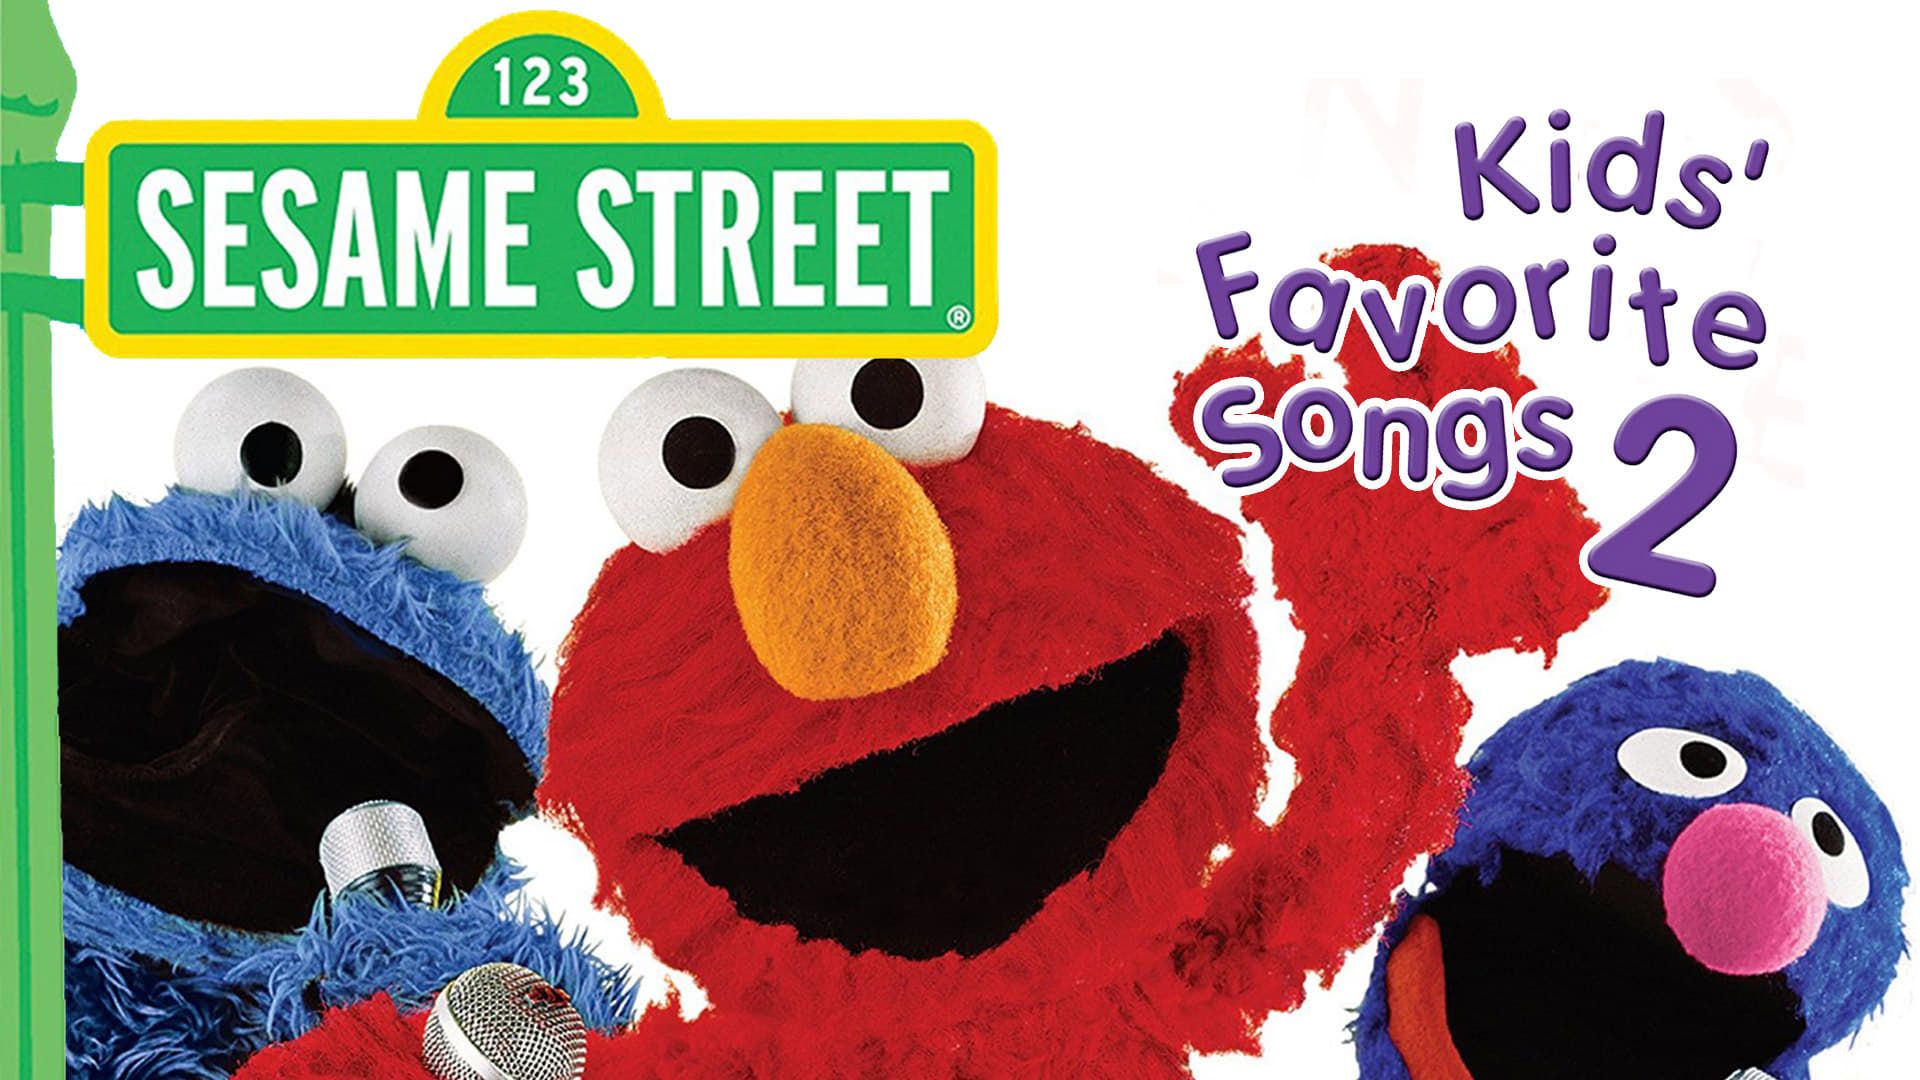 Sesame Street: Kids' Favorite Songs 2 background